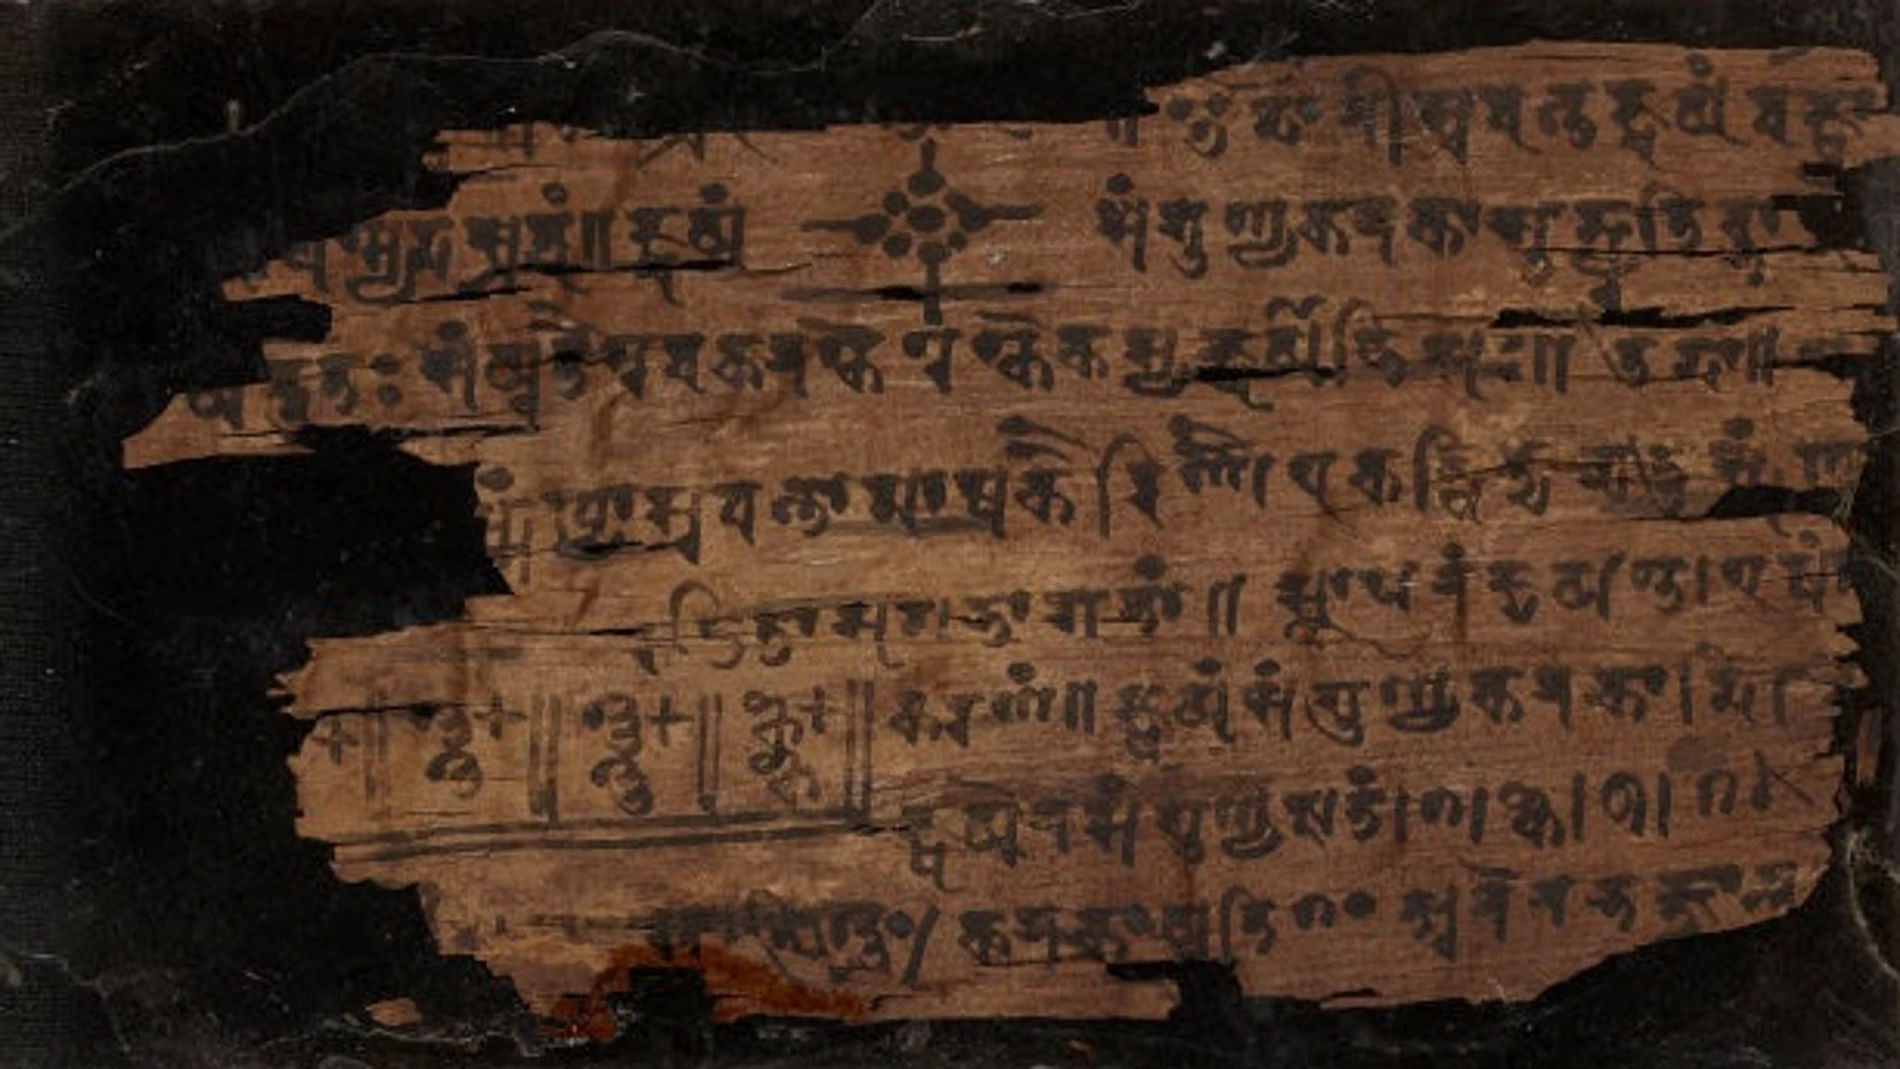 Un fragmento del manuscrito Bakhshali